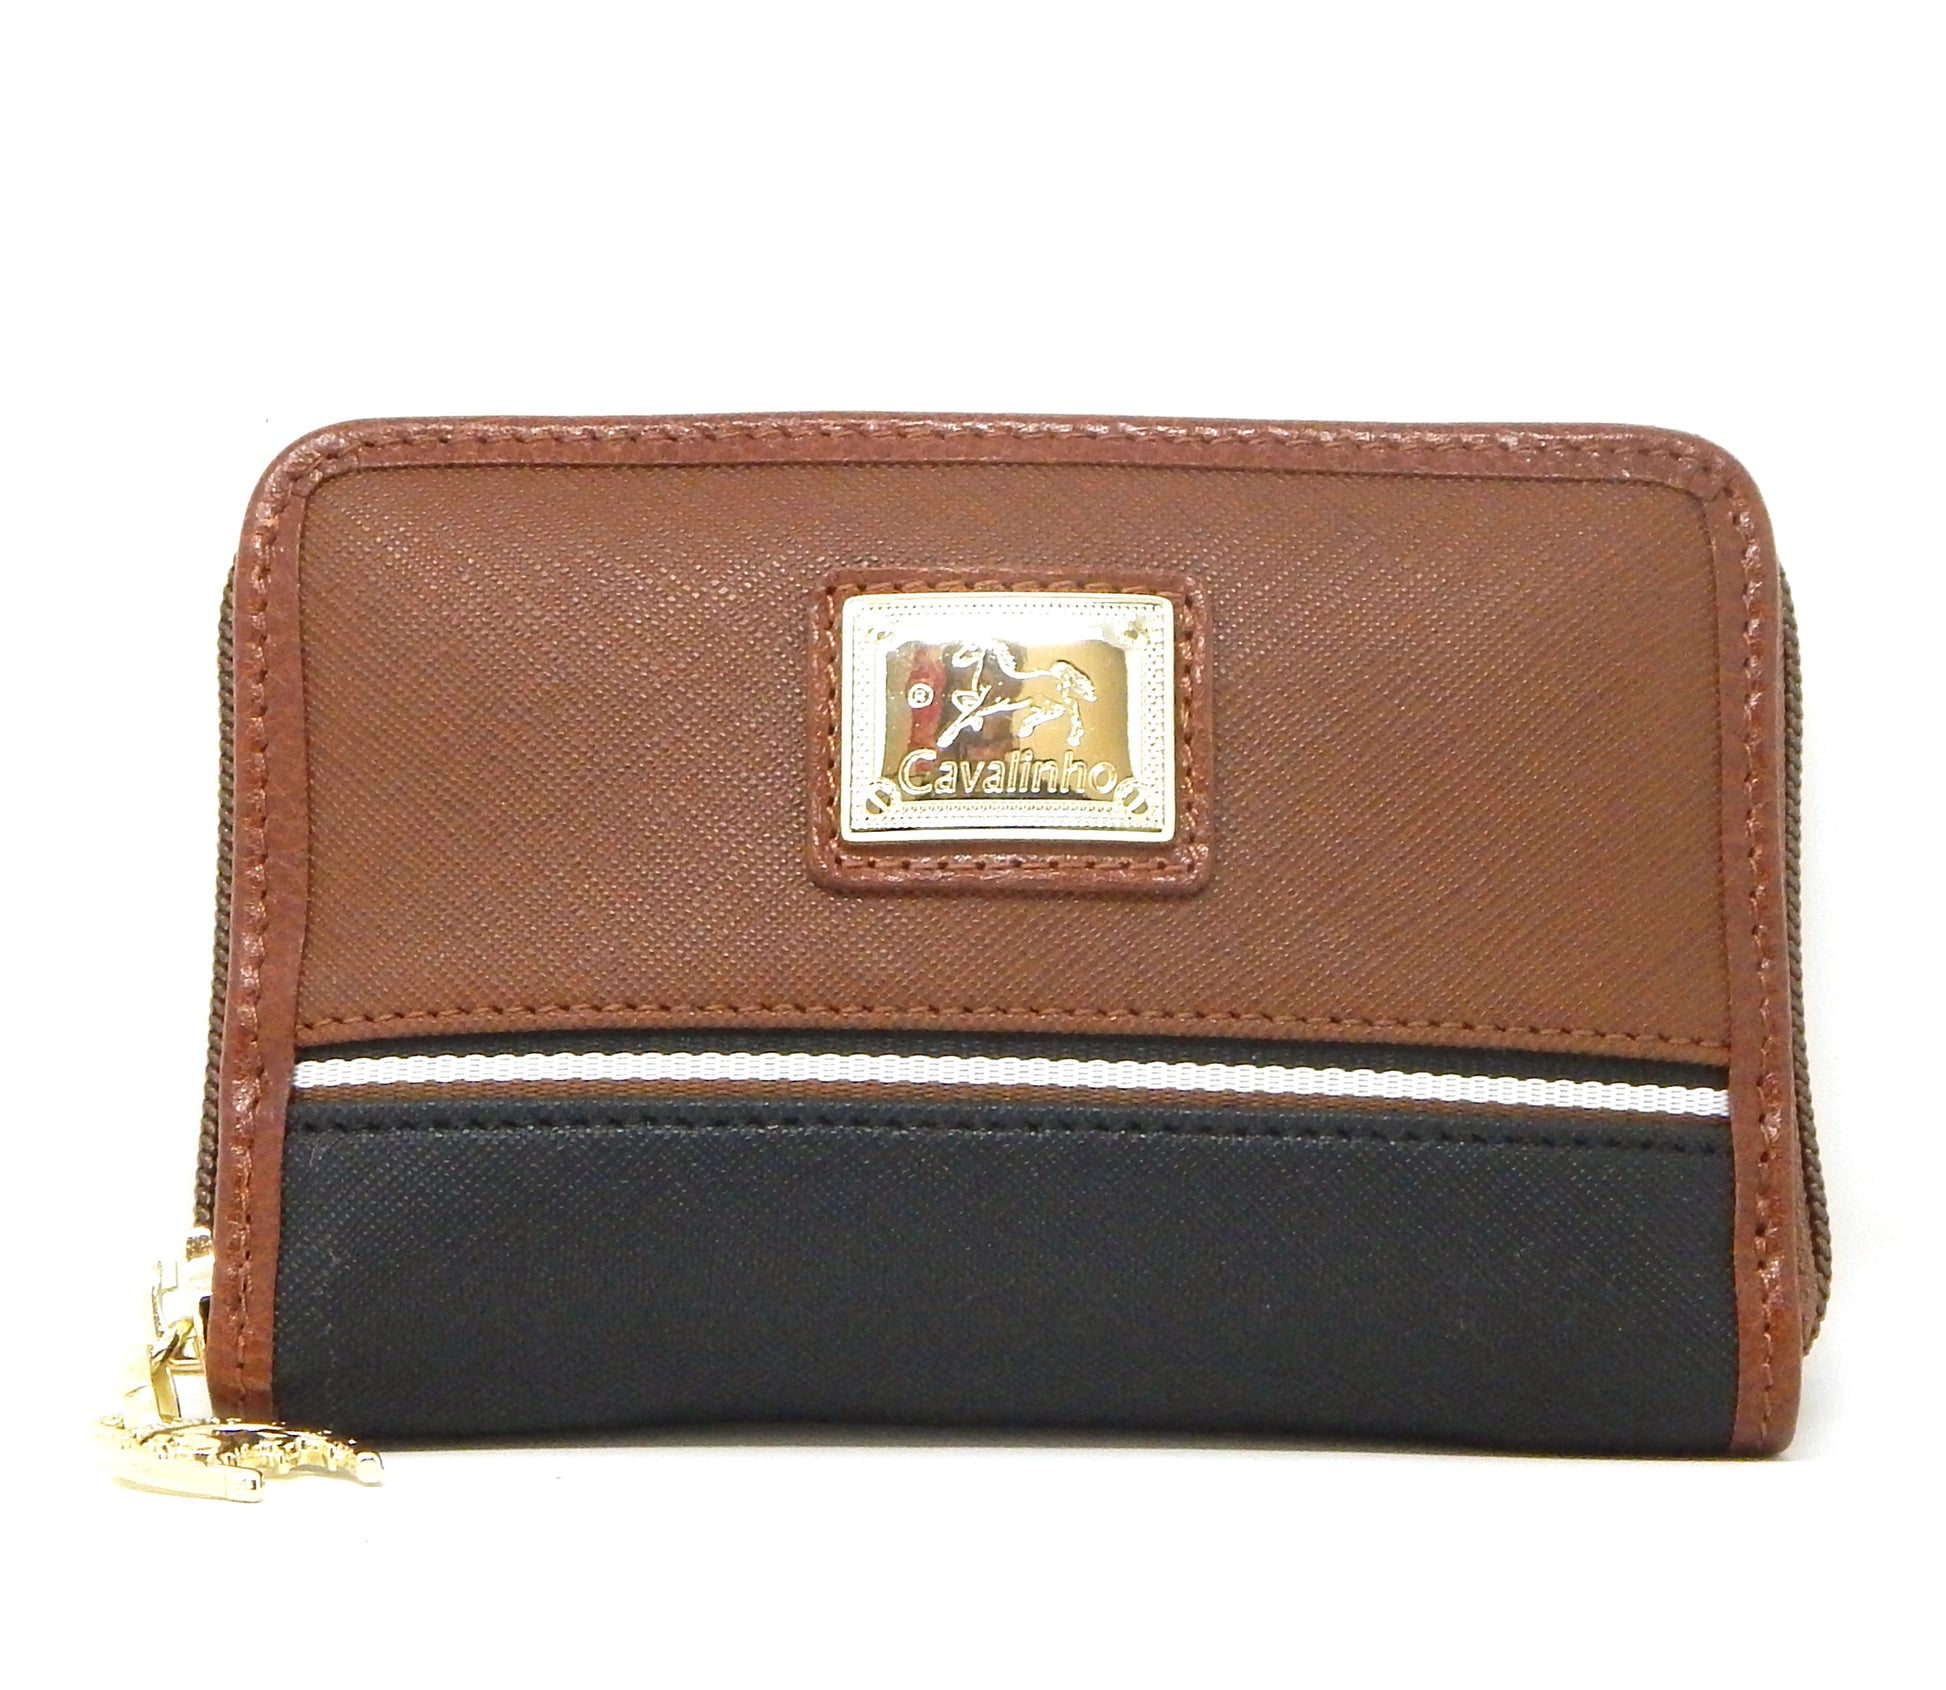 Cavalinho Unique Card Holder Wallet - Black & Honey - 28260217.32.99_1